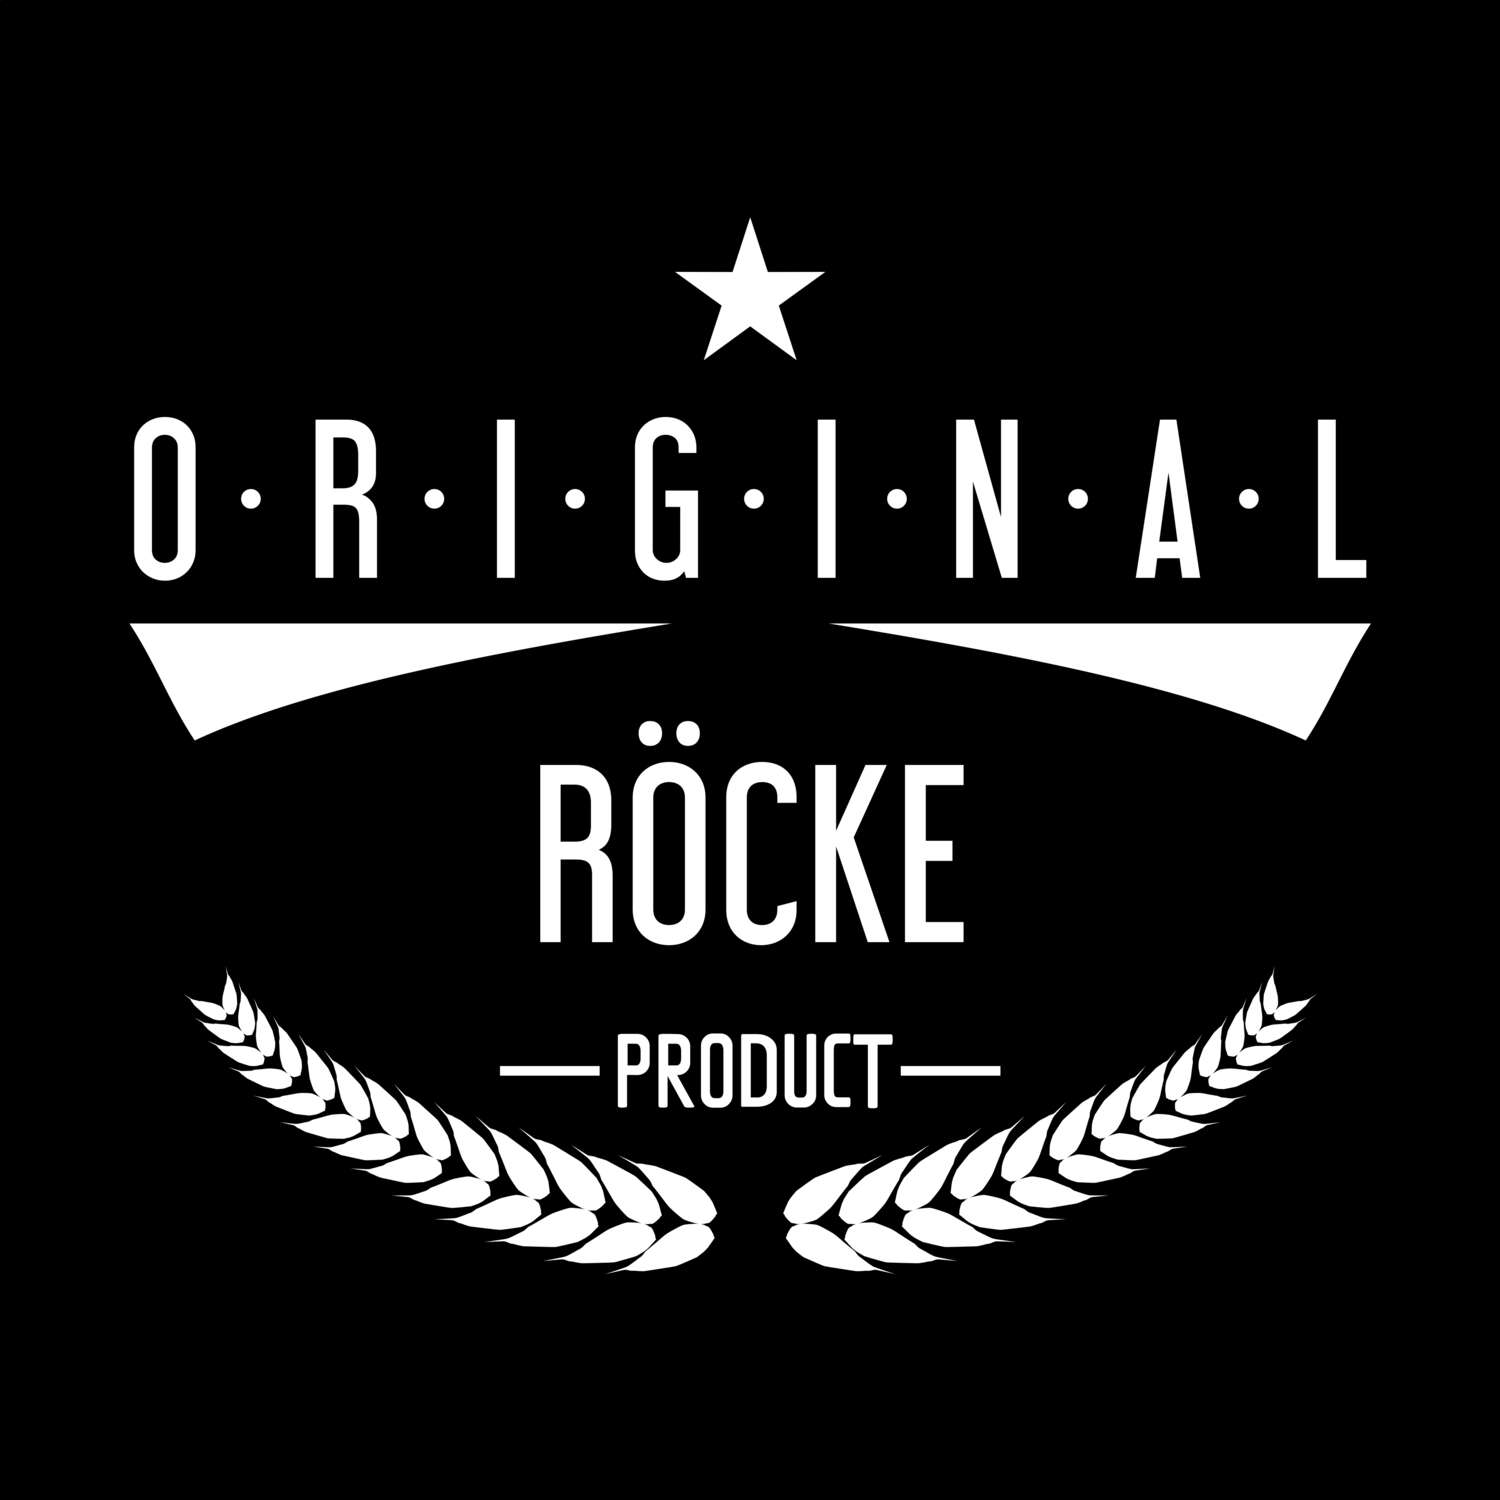 Röcke T-Shirt »Original Product«